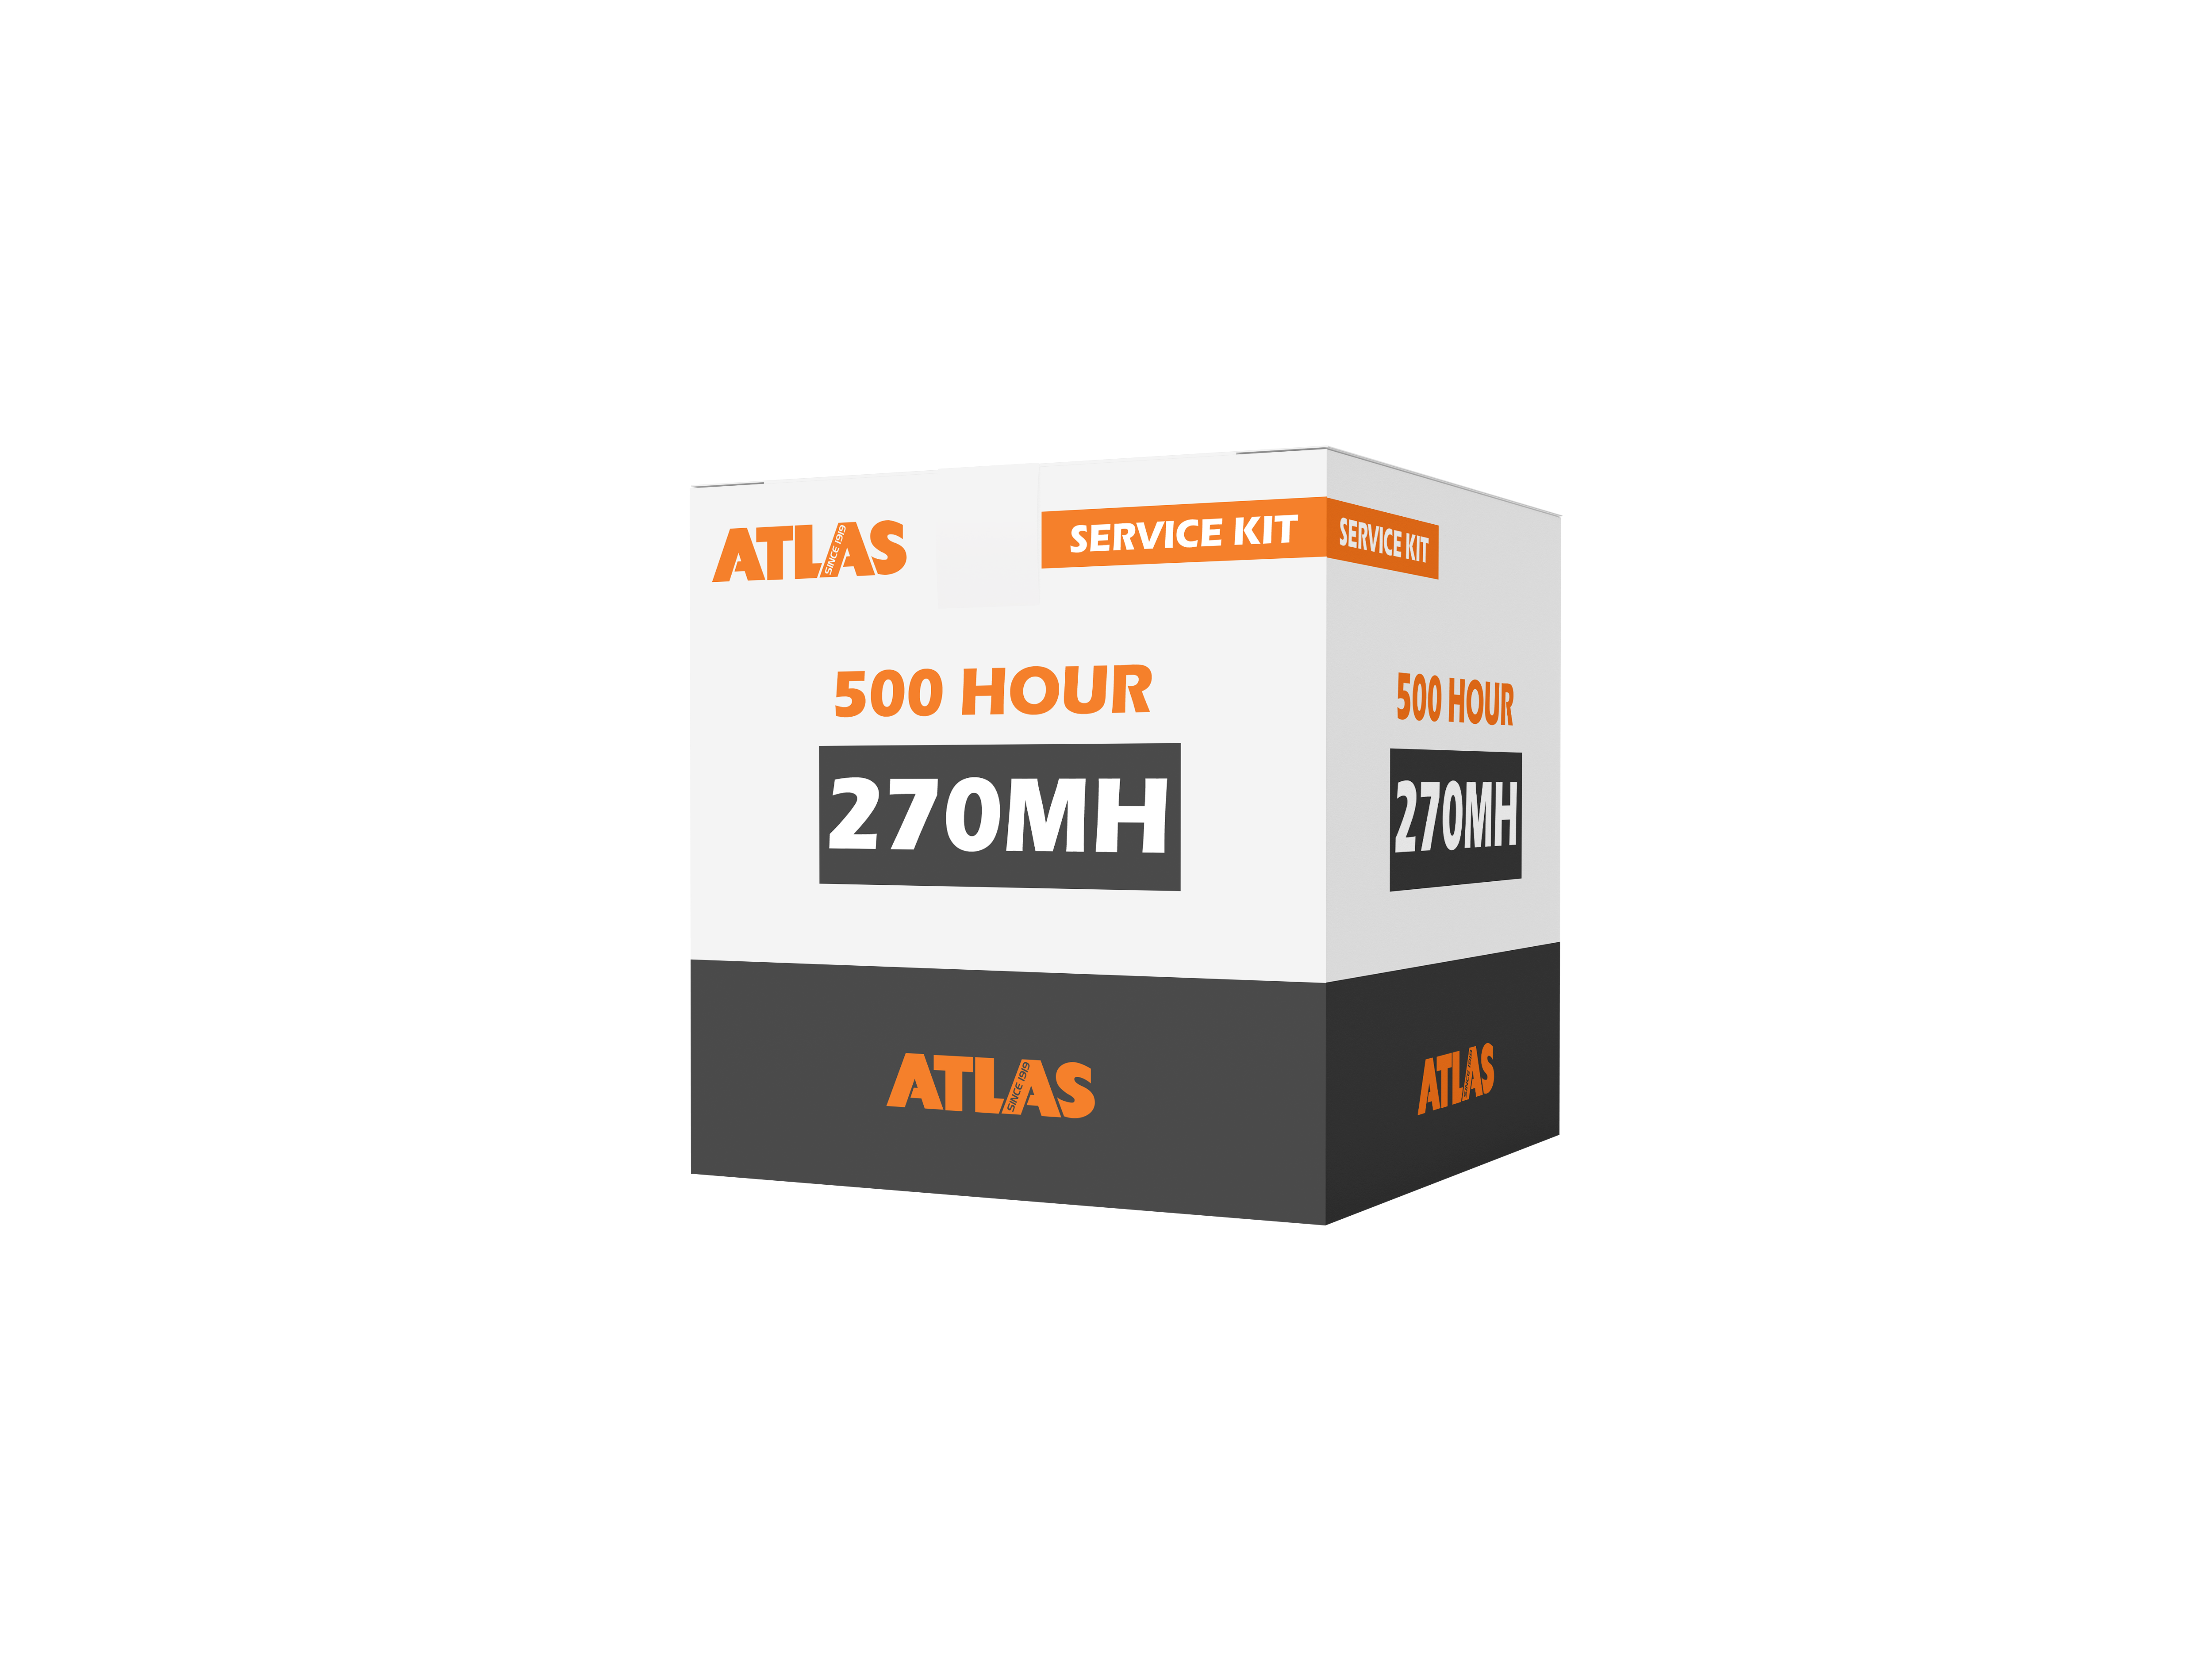 Atlas 270MH 500 Hour Service Kit (Tier 3 Engine)